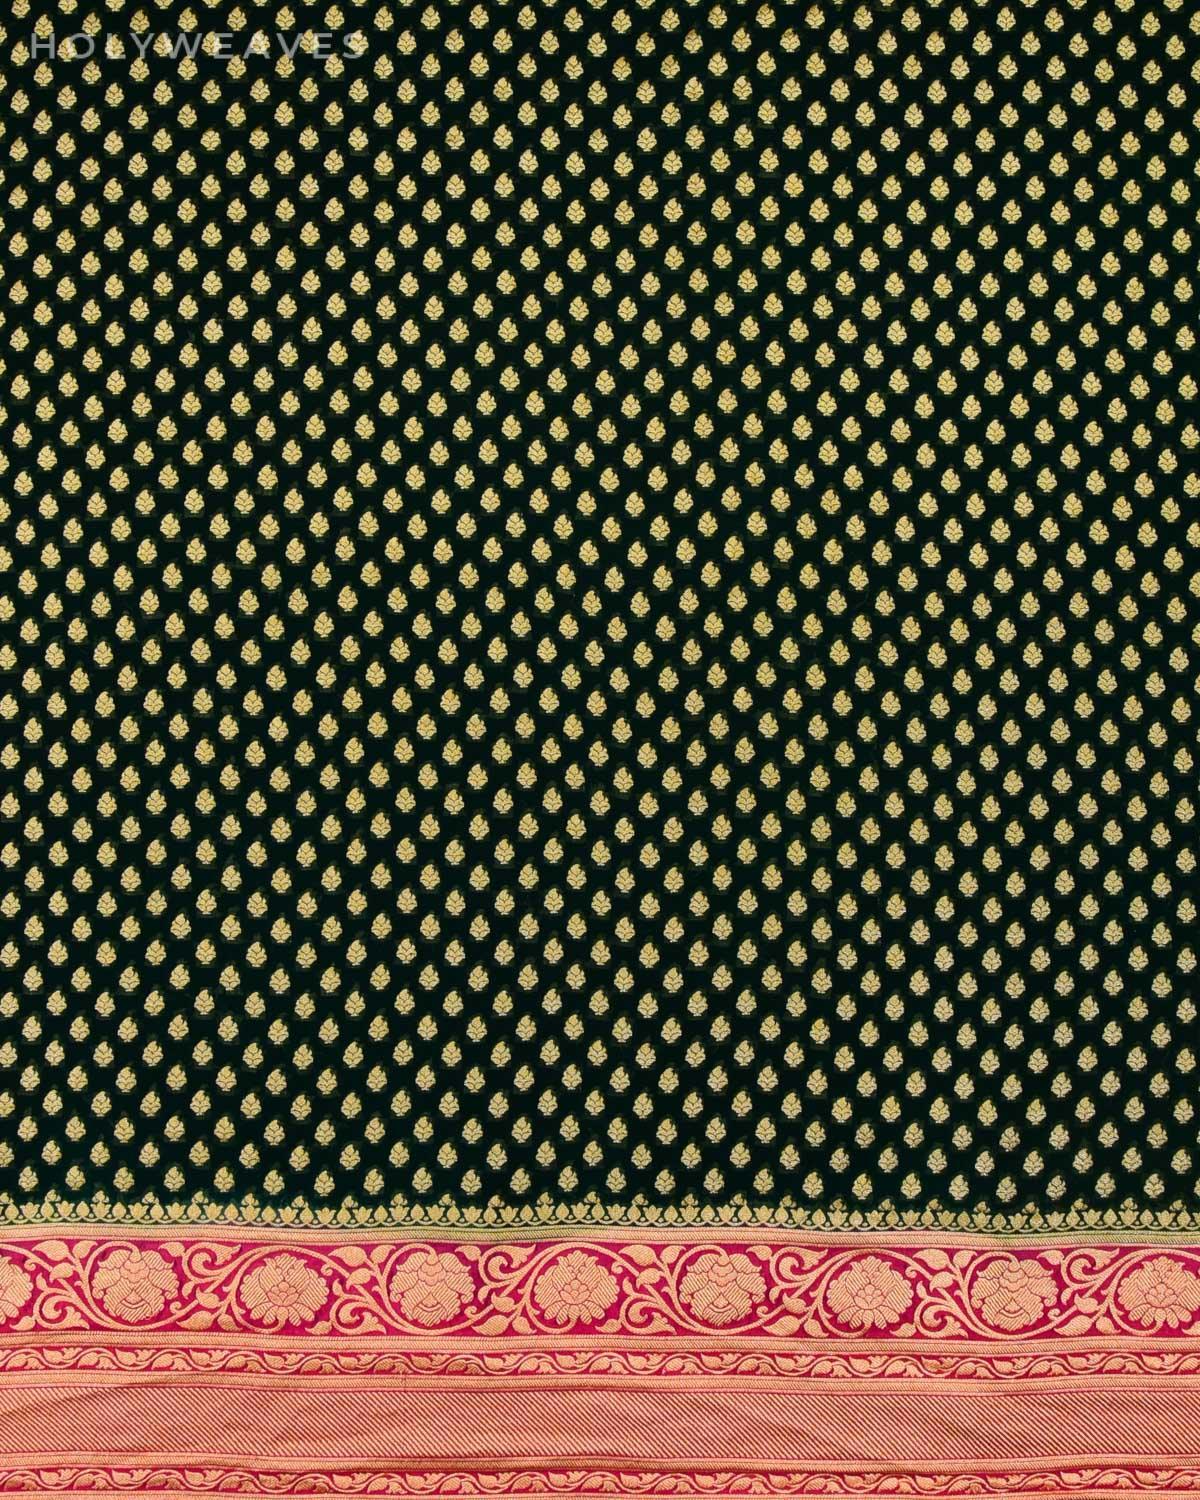 Bottle Green Banarasi Ghani Buti Cutwork Brocade Handwoven Khaddi Georgette Saree with Contrast Pink Border Pallu - By HolyWeaves, Benares